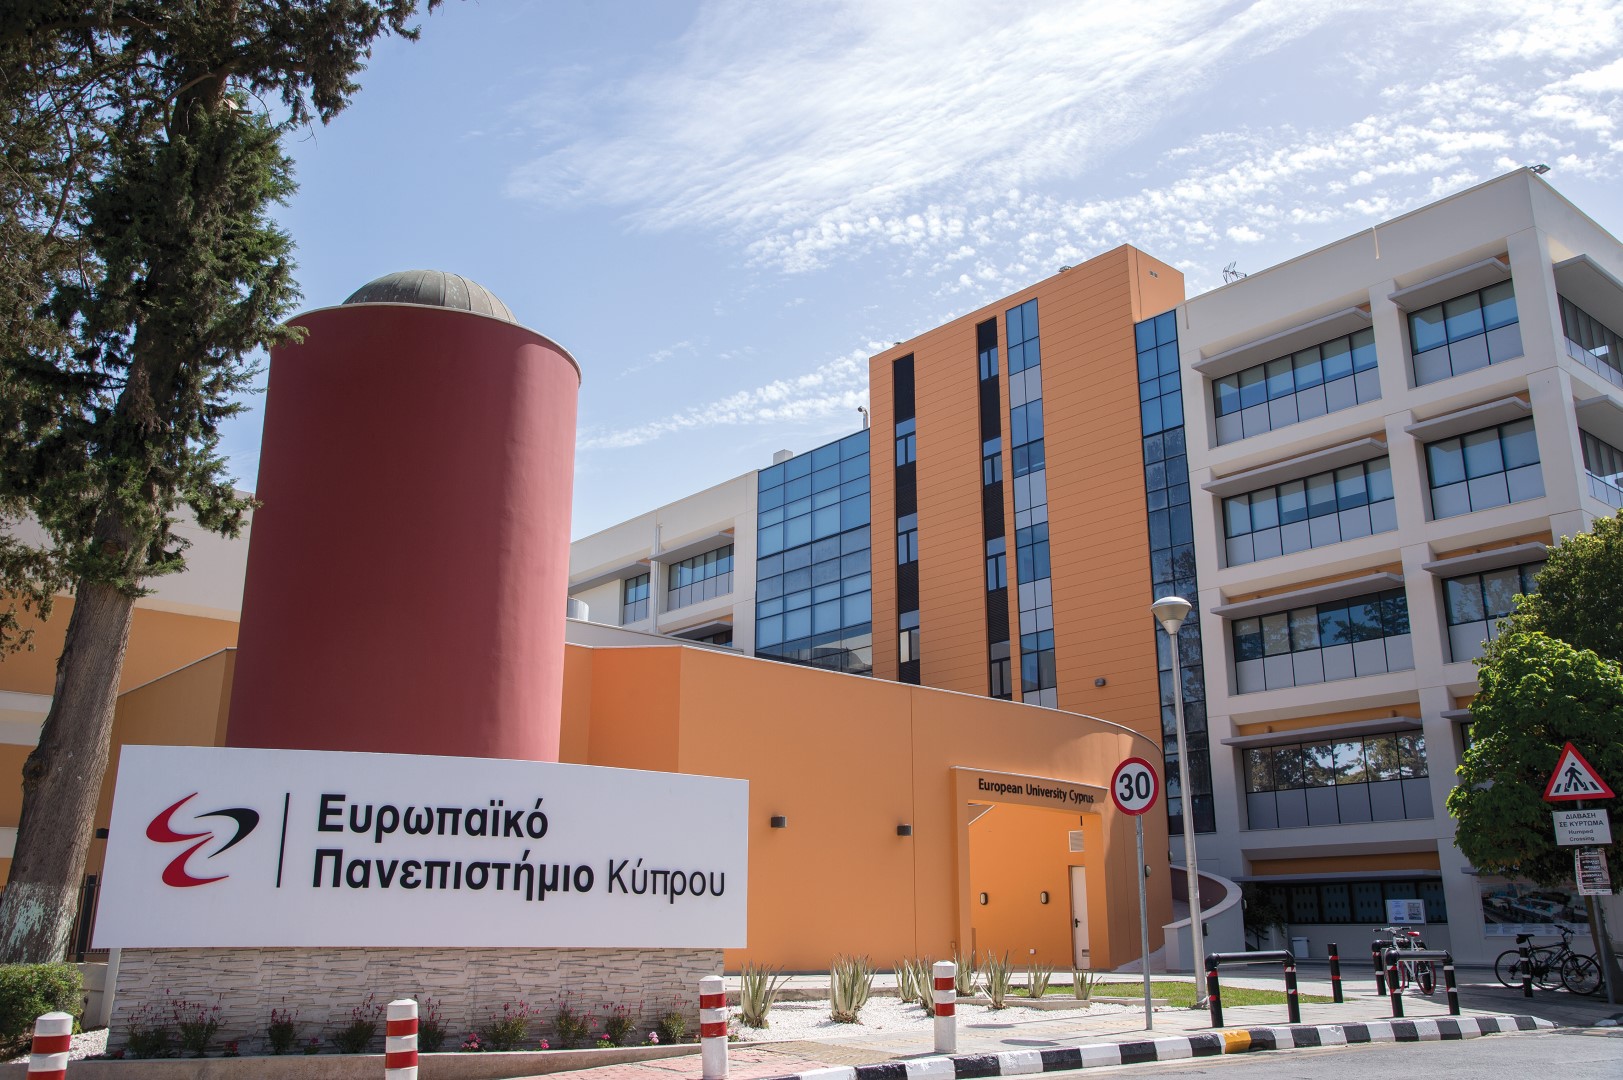 Webinar: Εξ αποστάσεως εκπαίδευση – η εναλλακτική επιλογή σπουδών στο Ευρωπαϊκό Πανεπιστήμιο Κύπρου